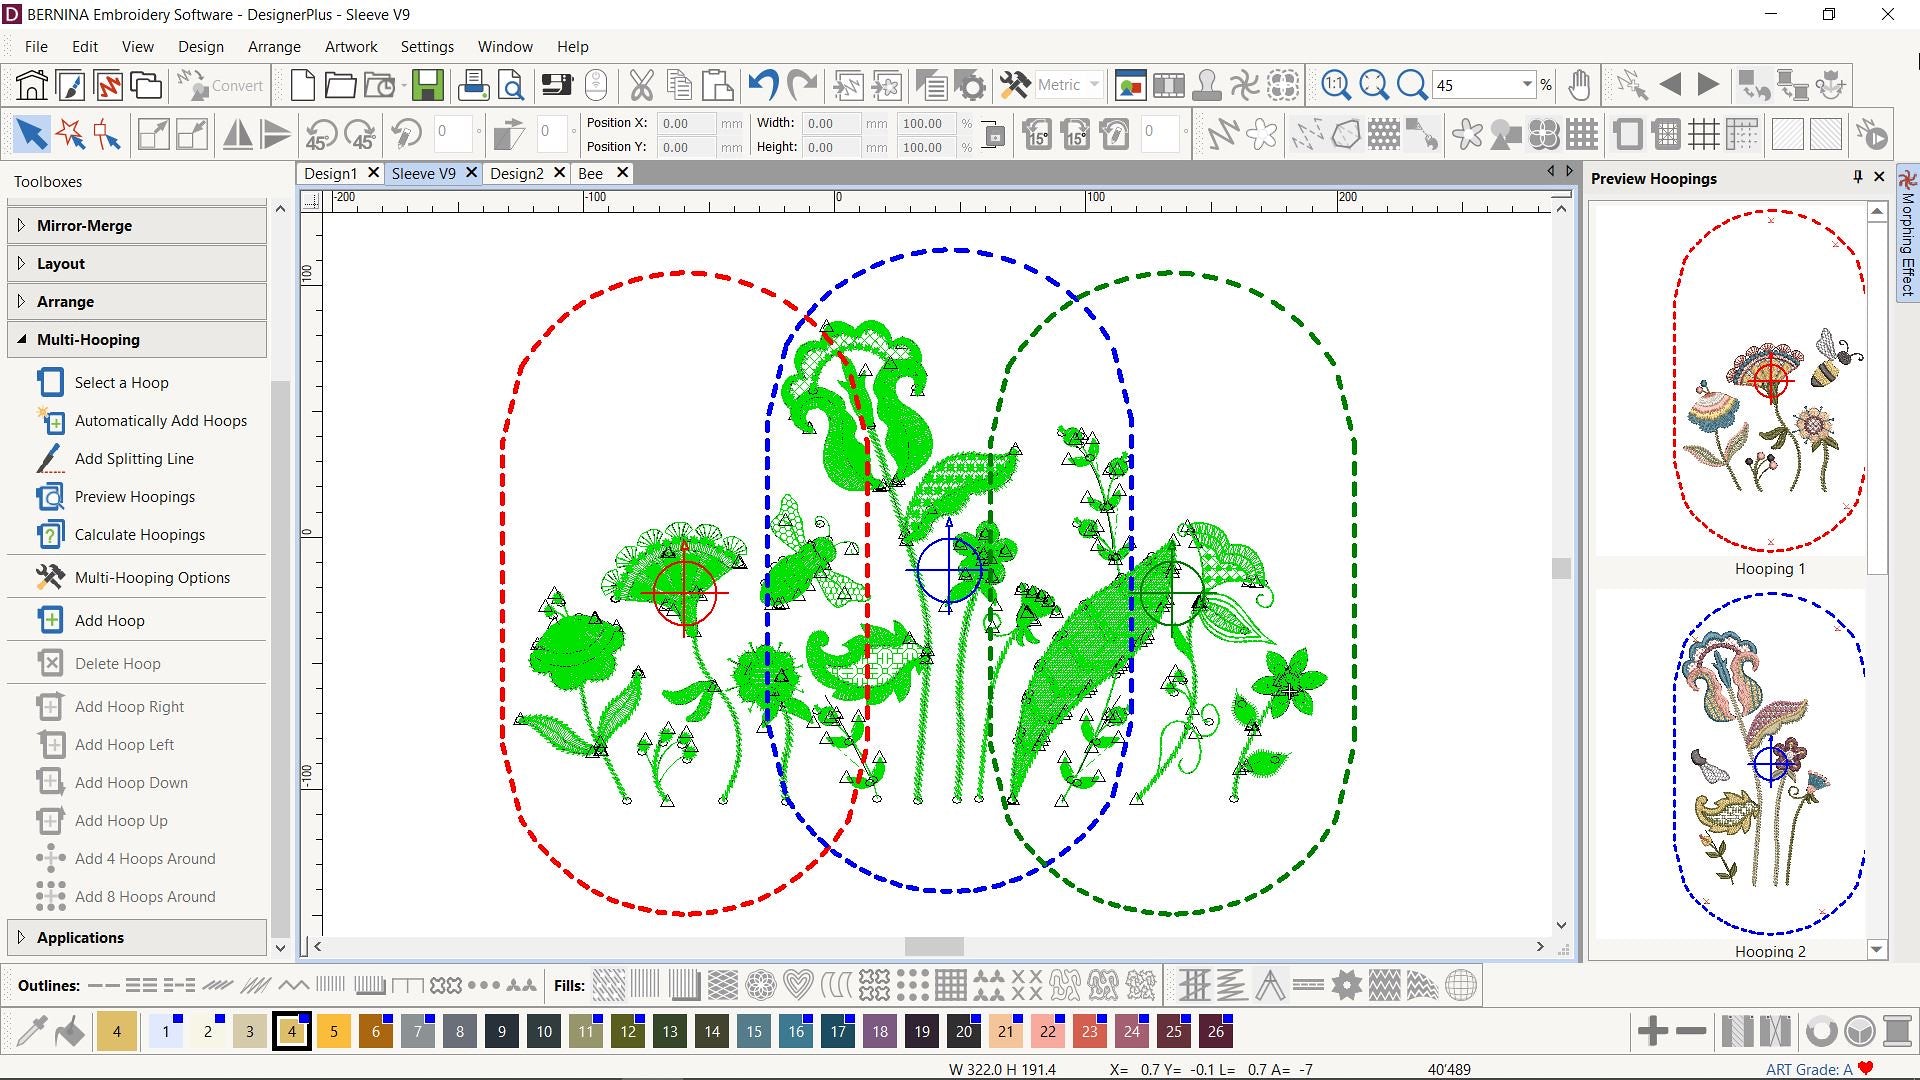 Bernina Version 9 Embroidery Software DesignerPlus- Update from V6,7,8 DesignerPlus to V9